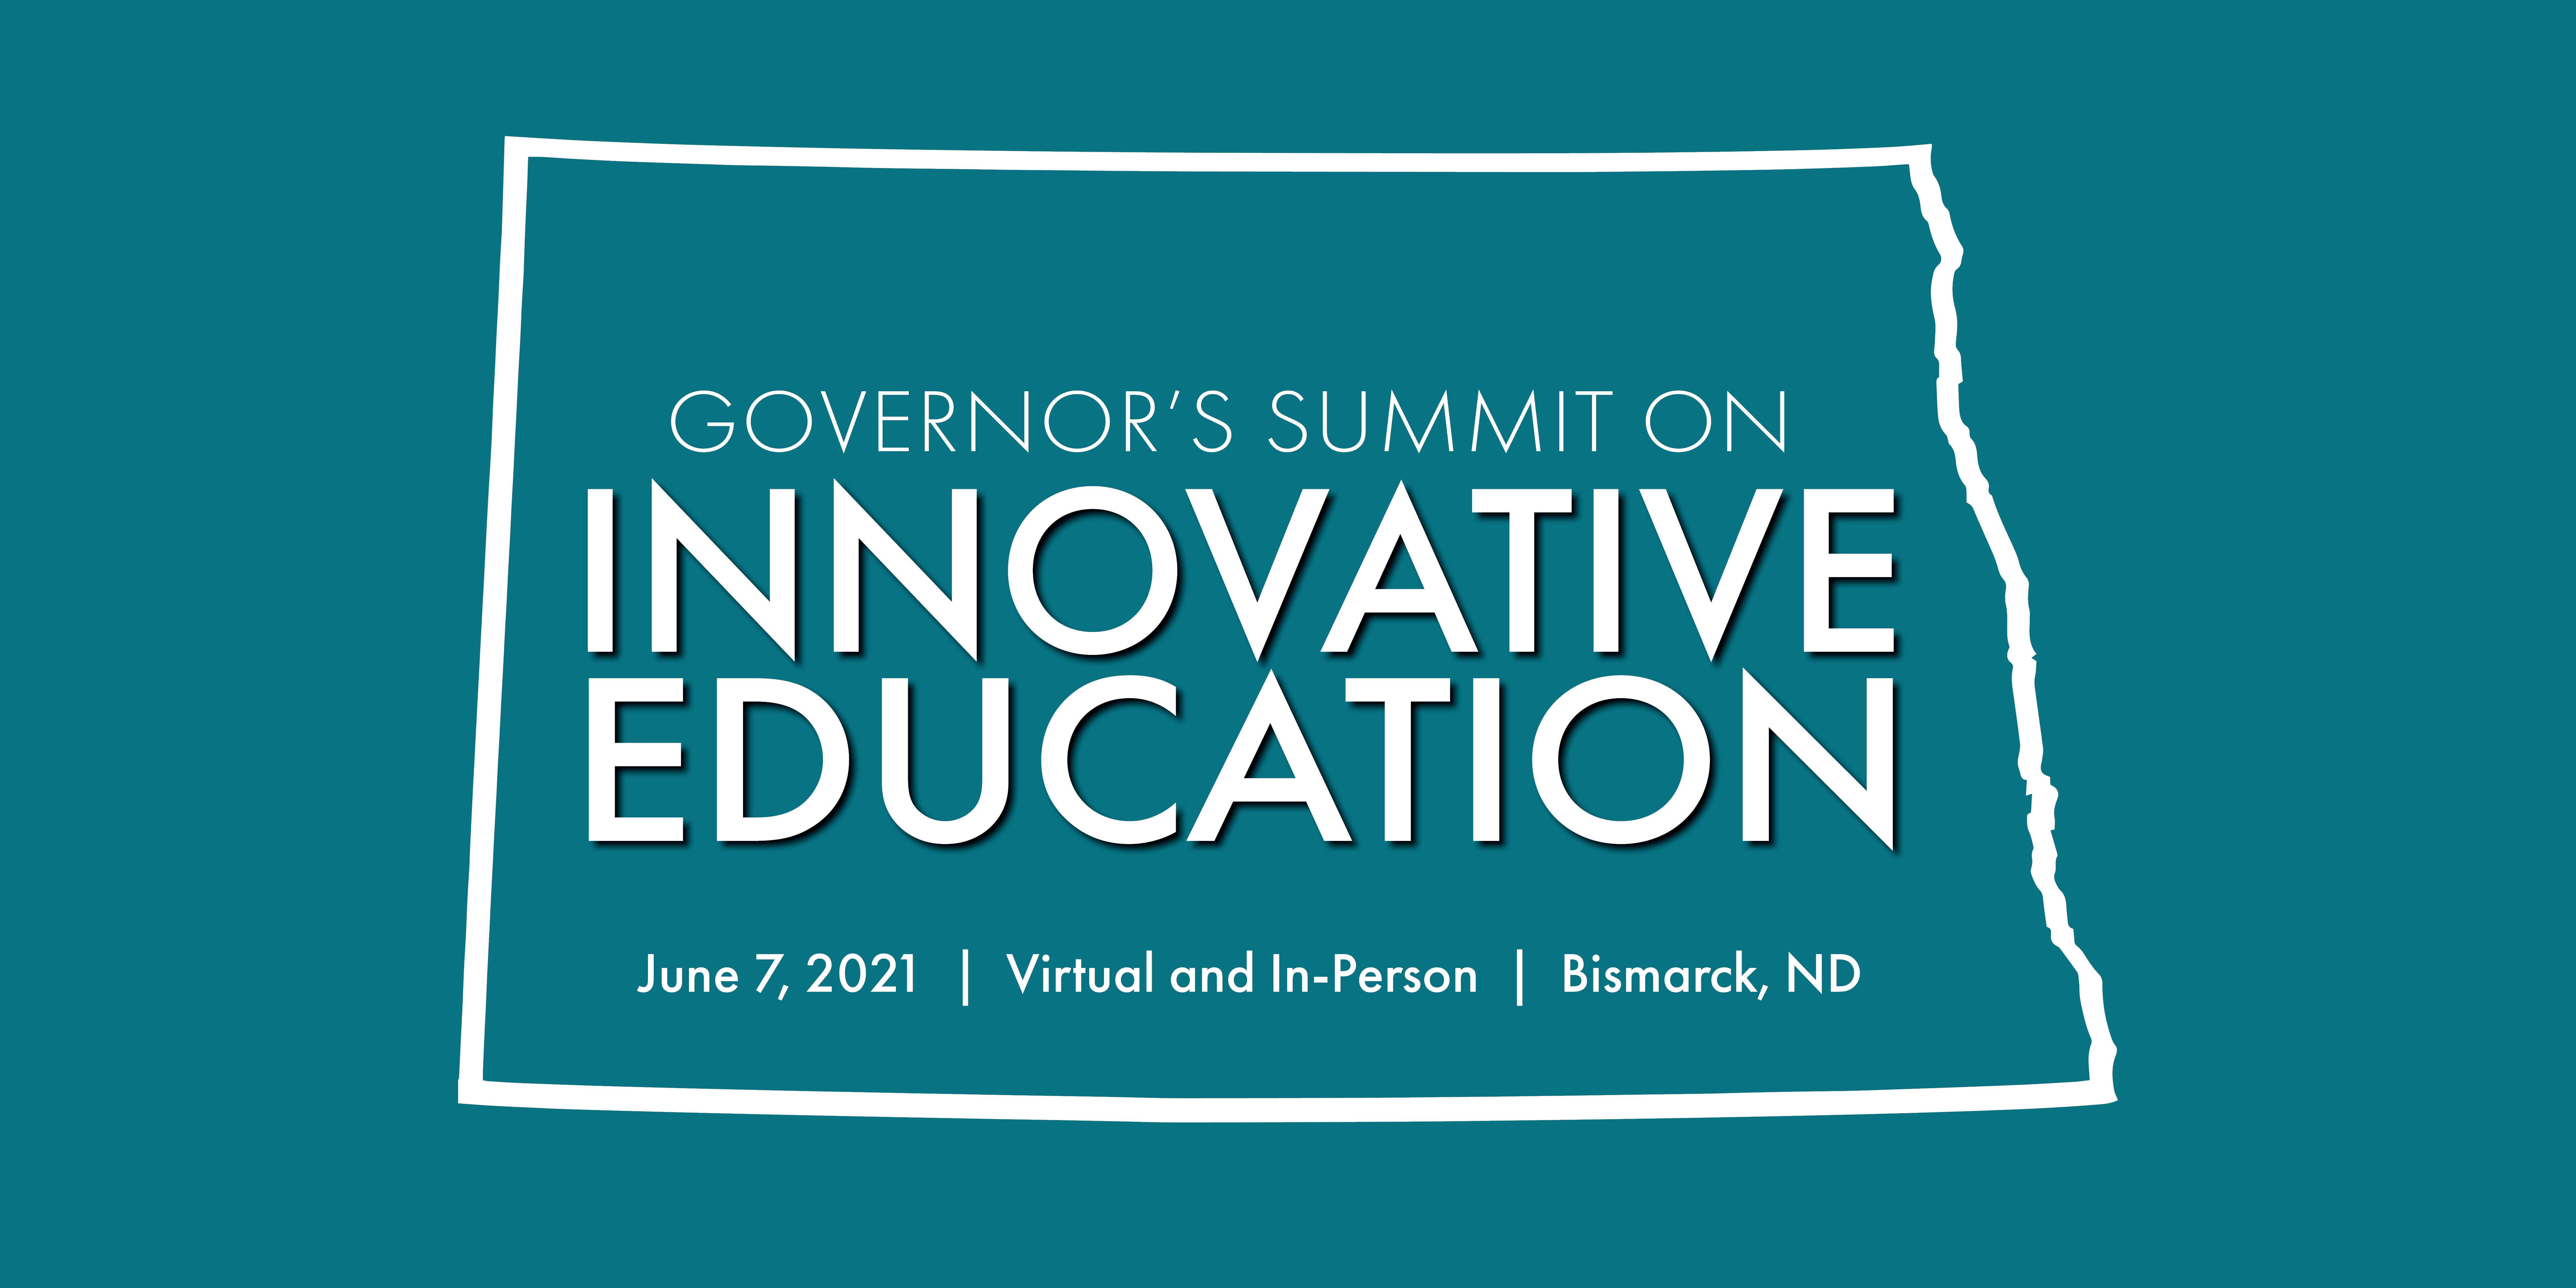 Governor's Summit on Innovative Education